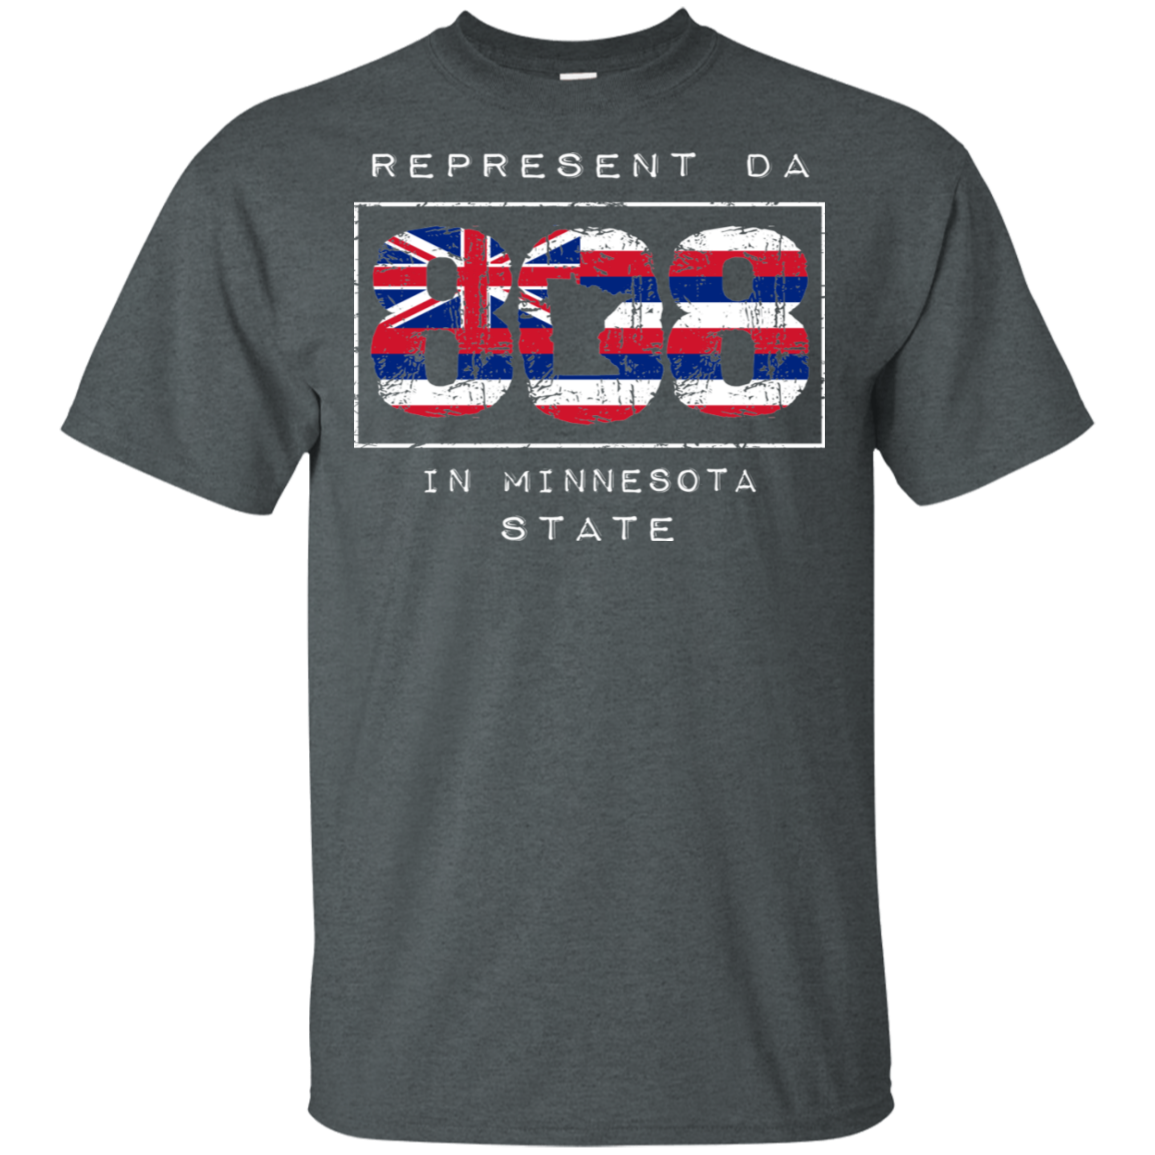 Rep Da 808 In Minnesota State Ultra Cotton T-Shirt, T-Shirts, Hawaii Nei All Day